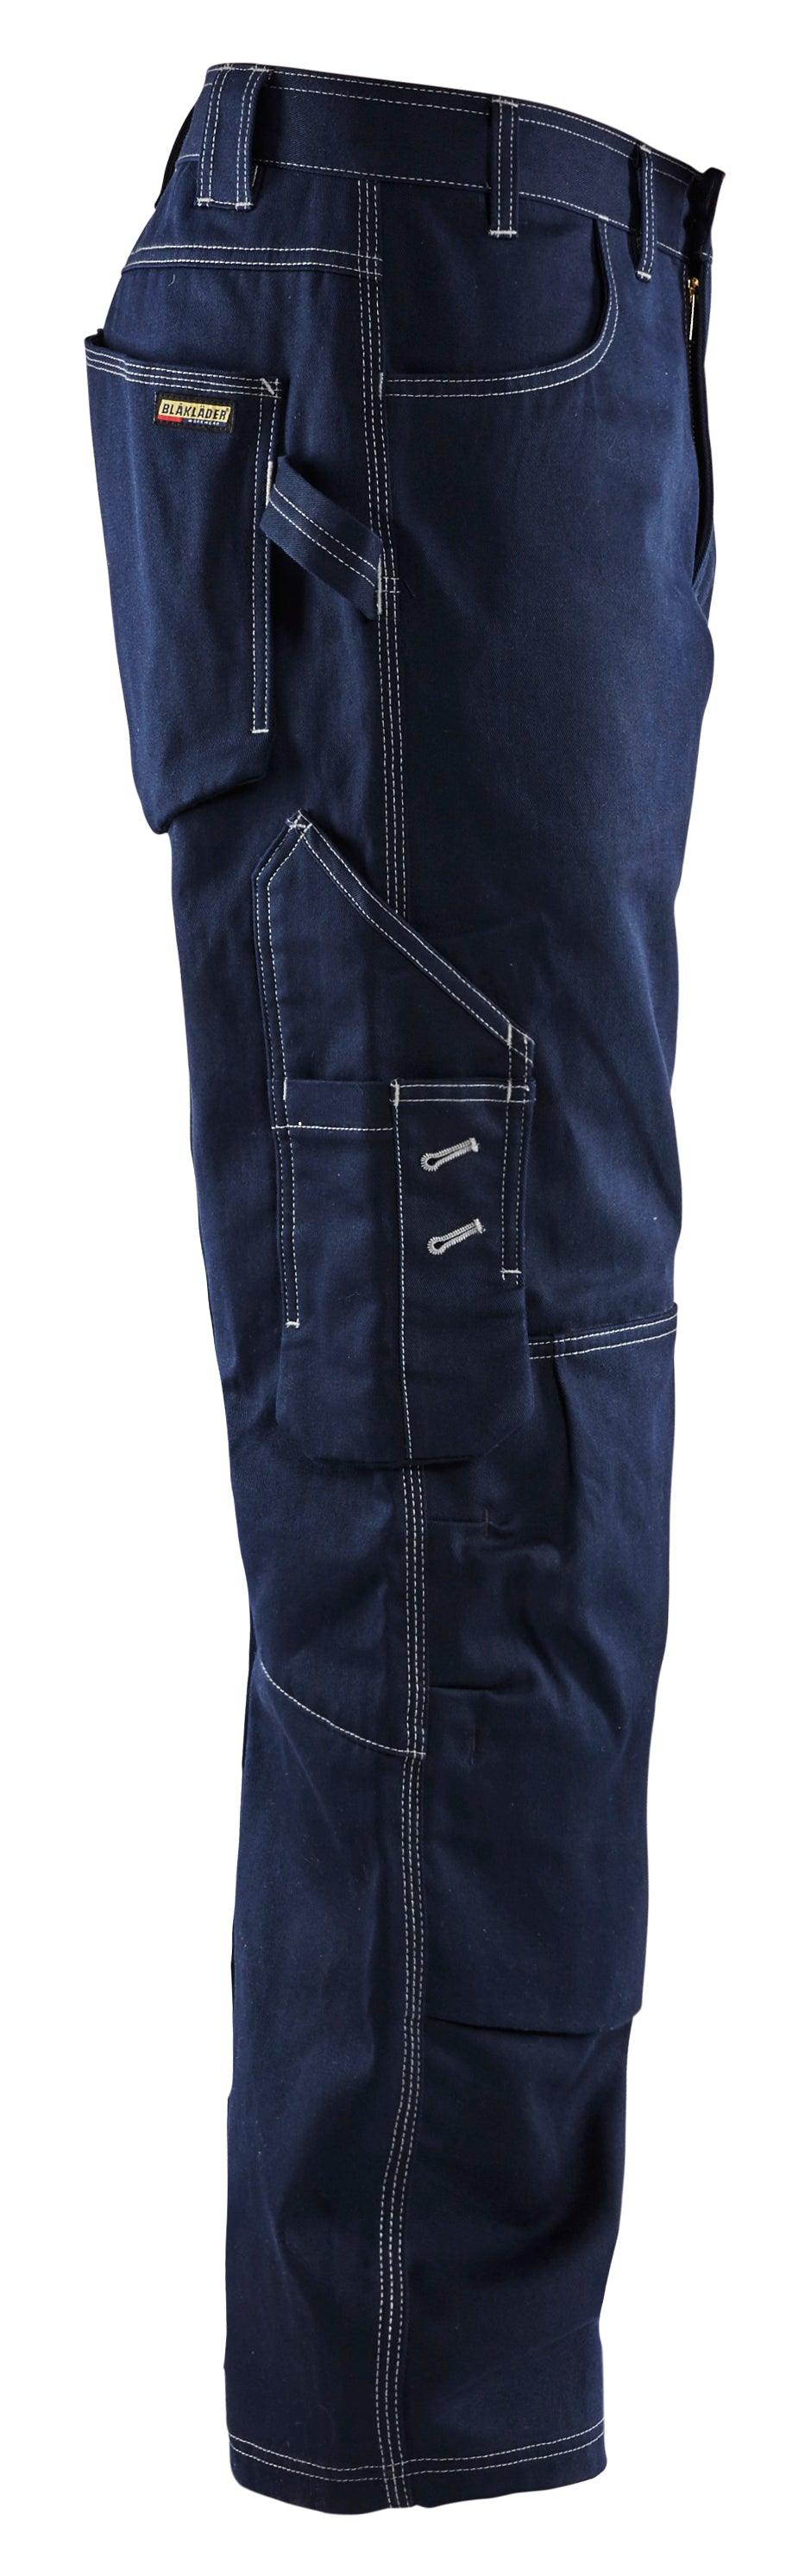 Skylinewears Men cargo pants Workwear Trousers Utility Work Pants with  Cordura Knee Reinforcement Navy W34-L32 - Walmart.com